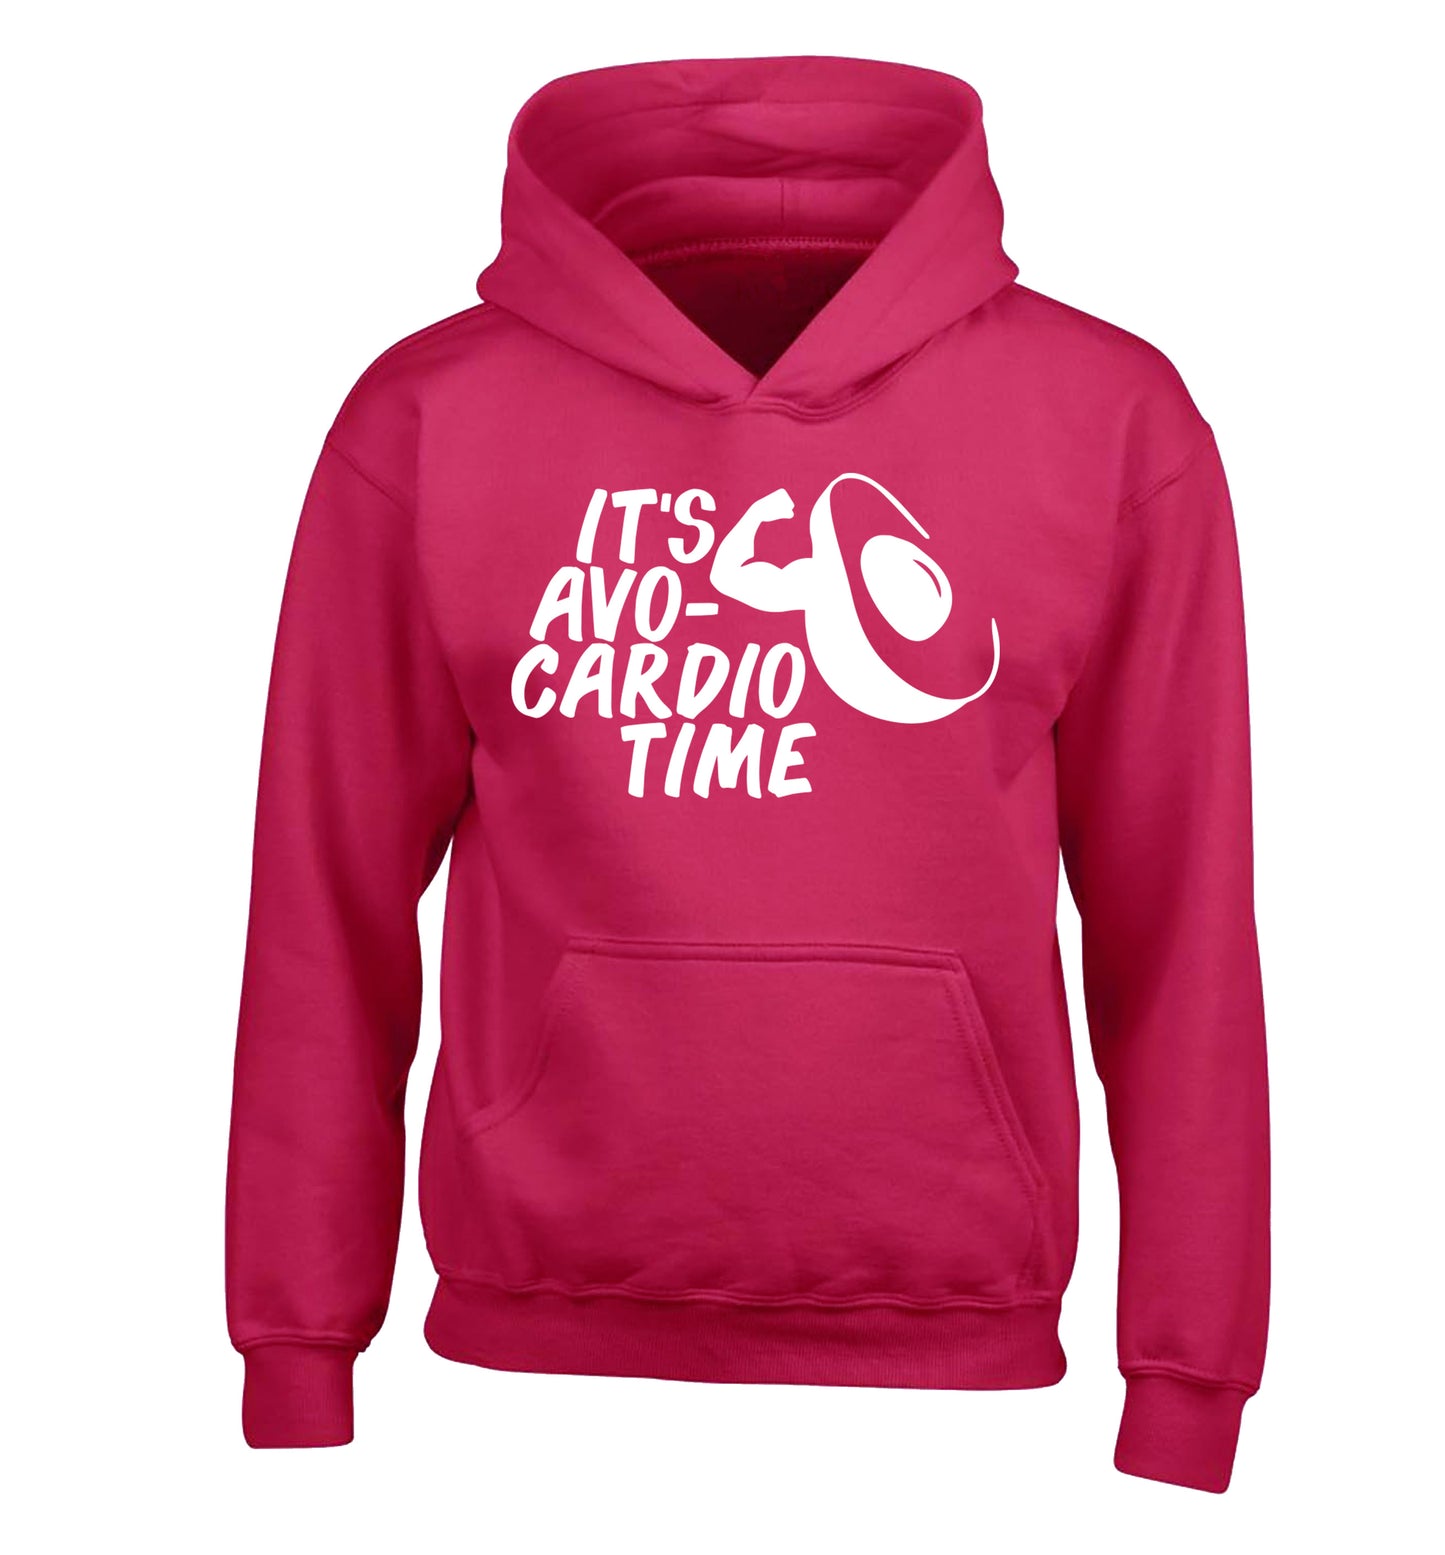 It's avo-cardio time children's pink hoodie 12-14 Years